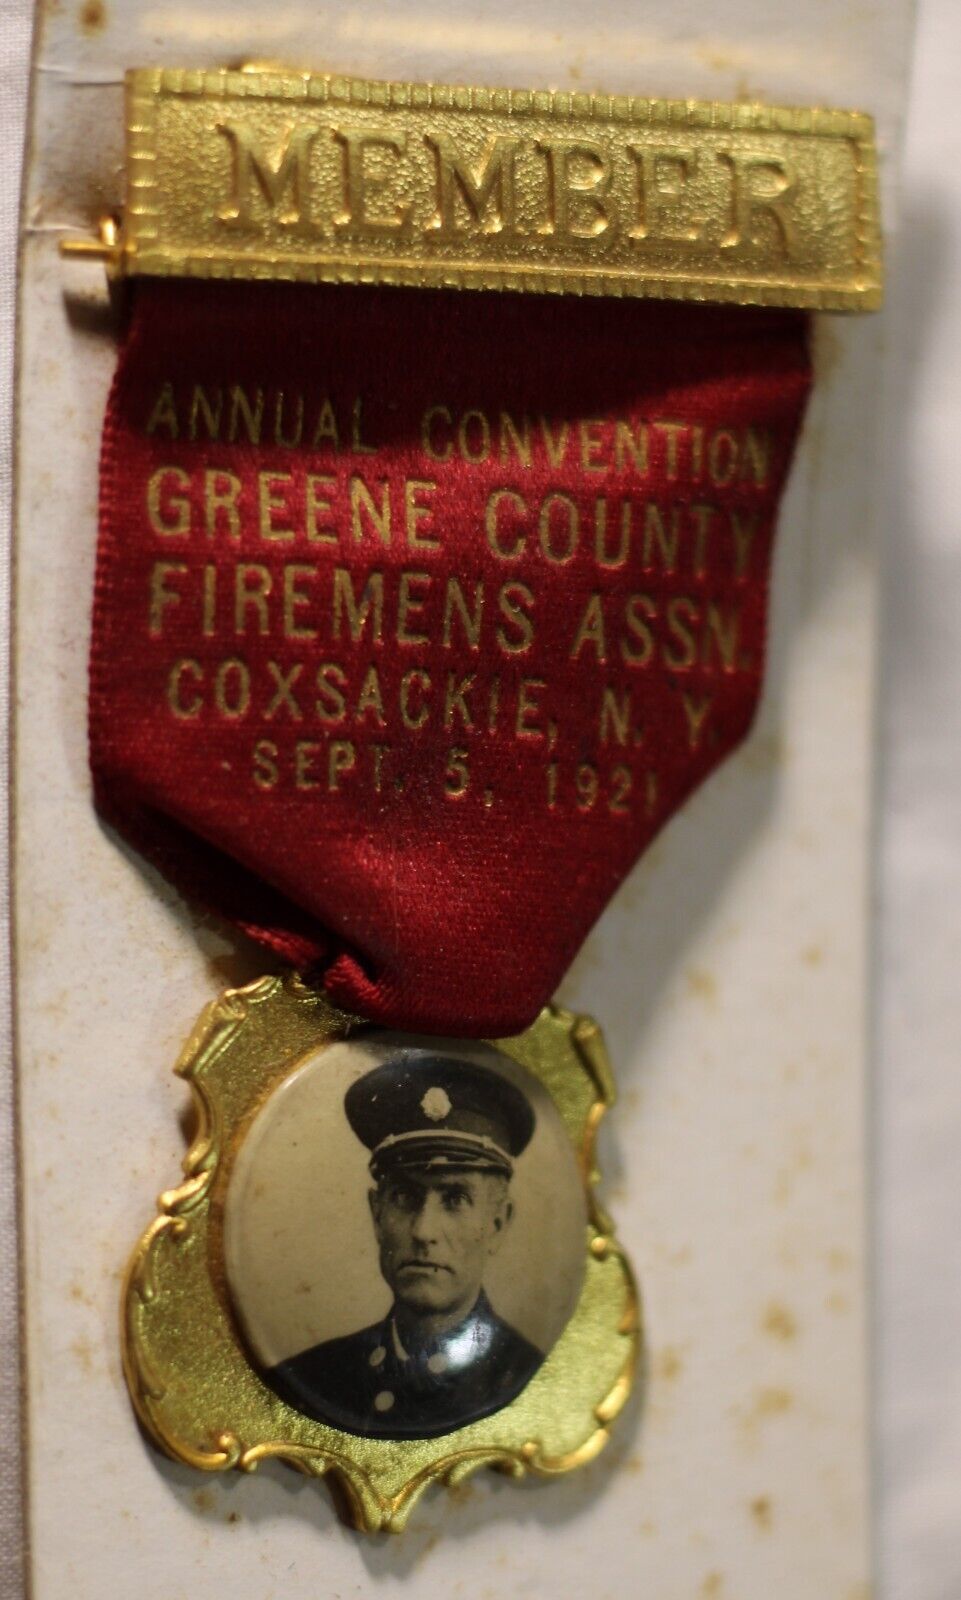 Vintage 1921 Firemen's Association Medal - Greene County, Coxsackie, New York